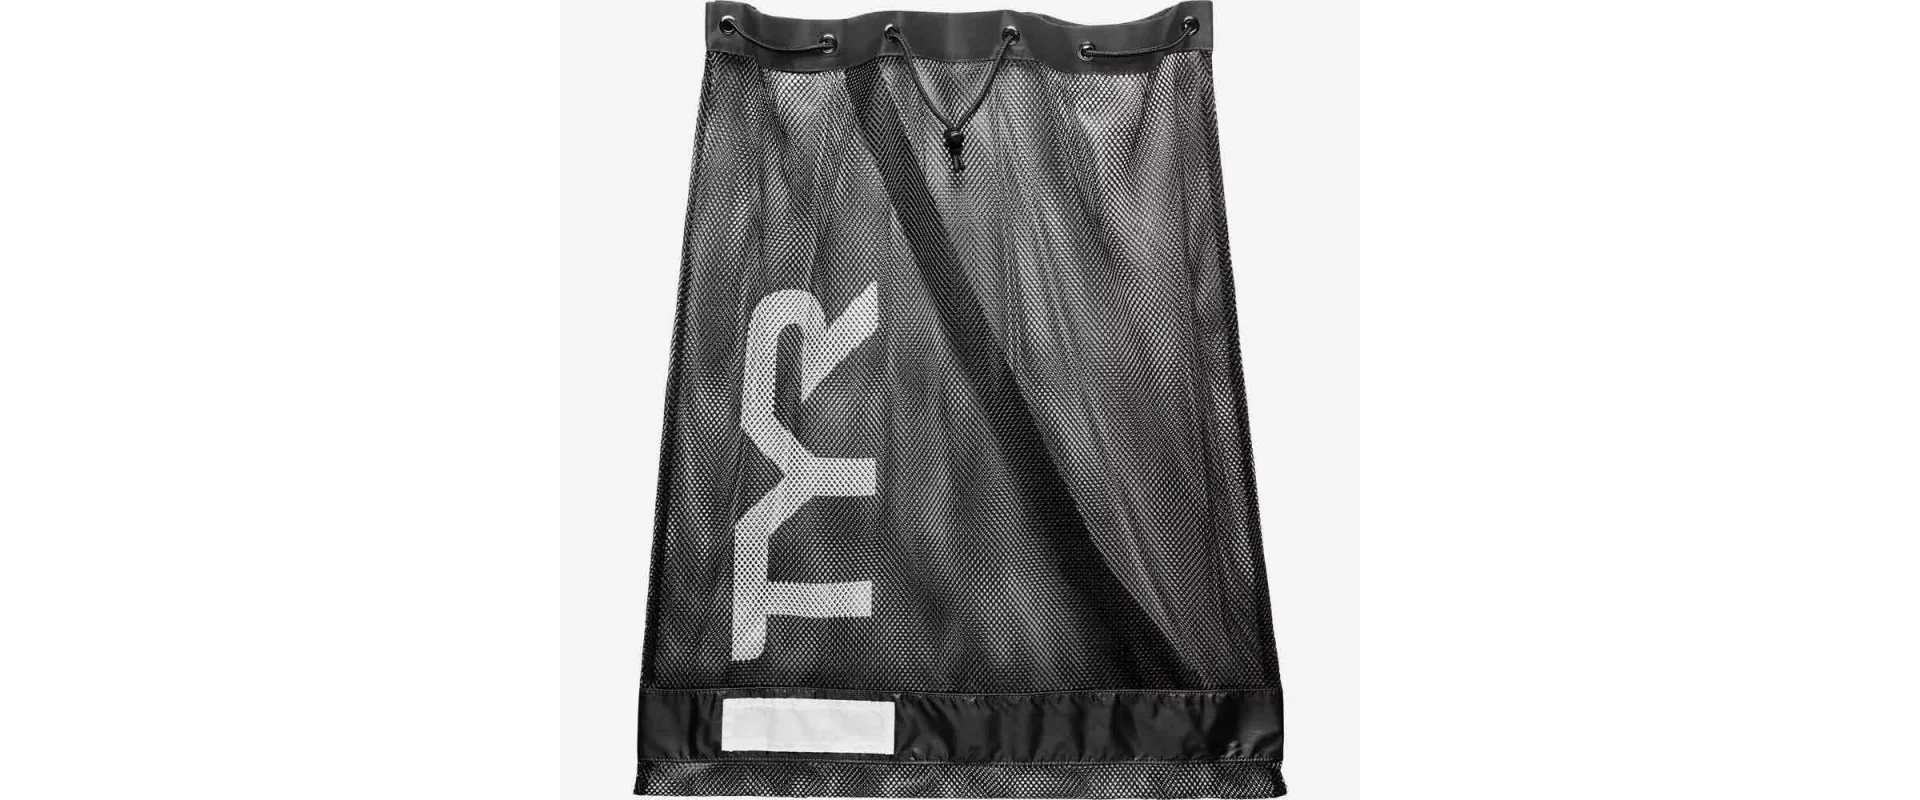 TYR Swim Gear Bag / Рюкзак для аксессуаров